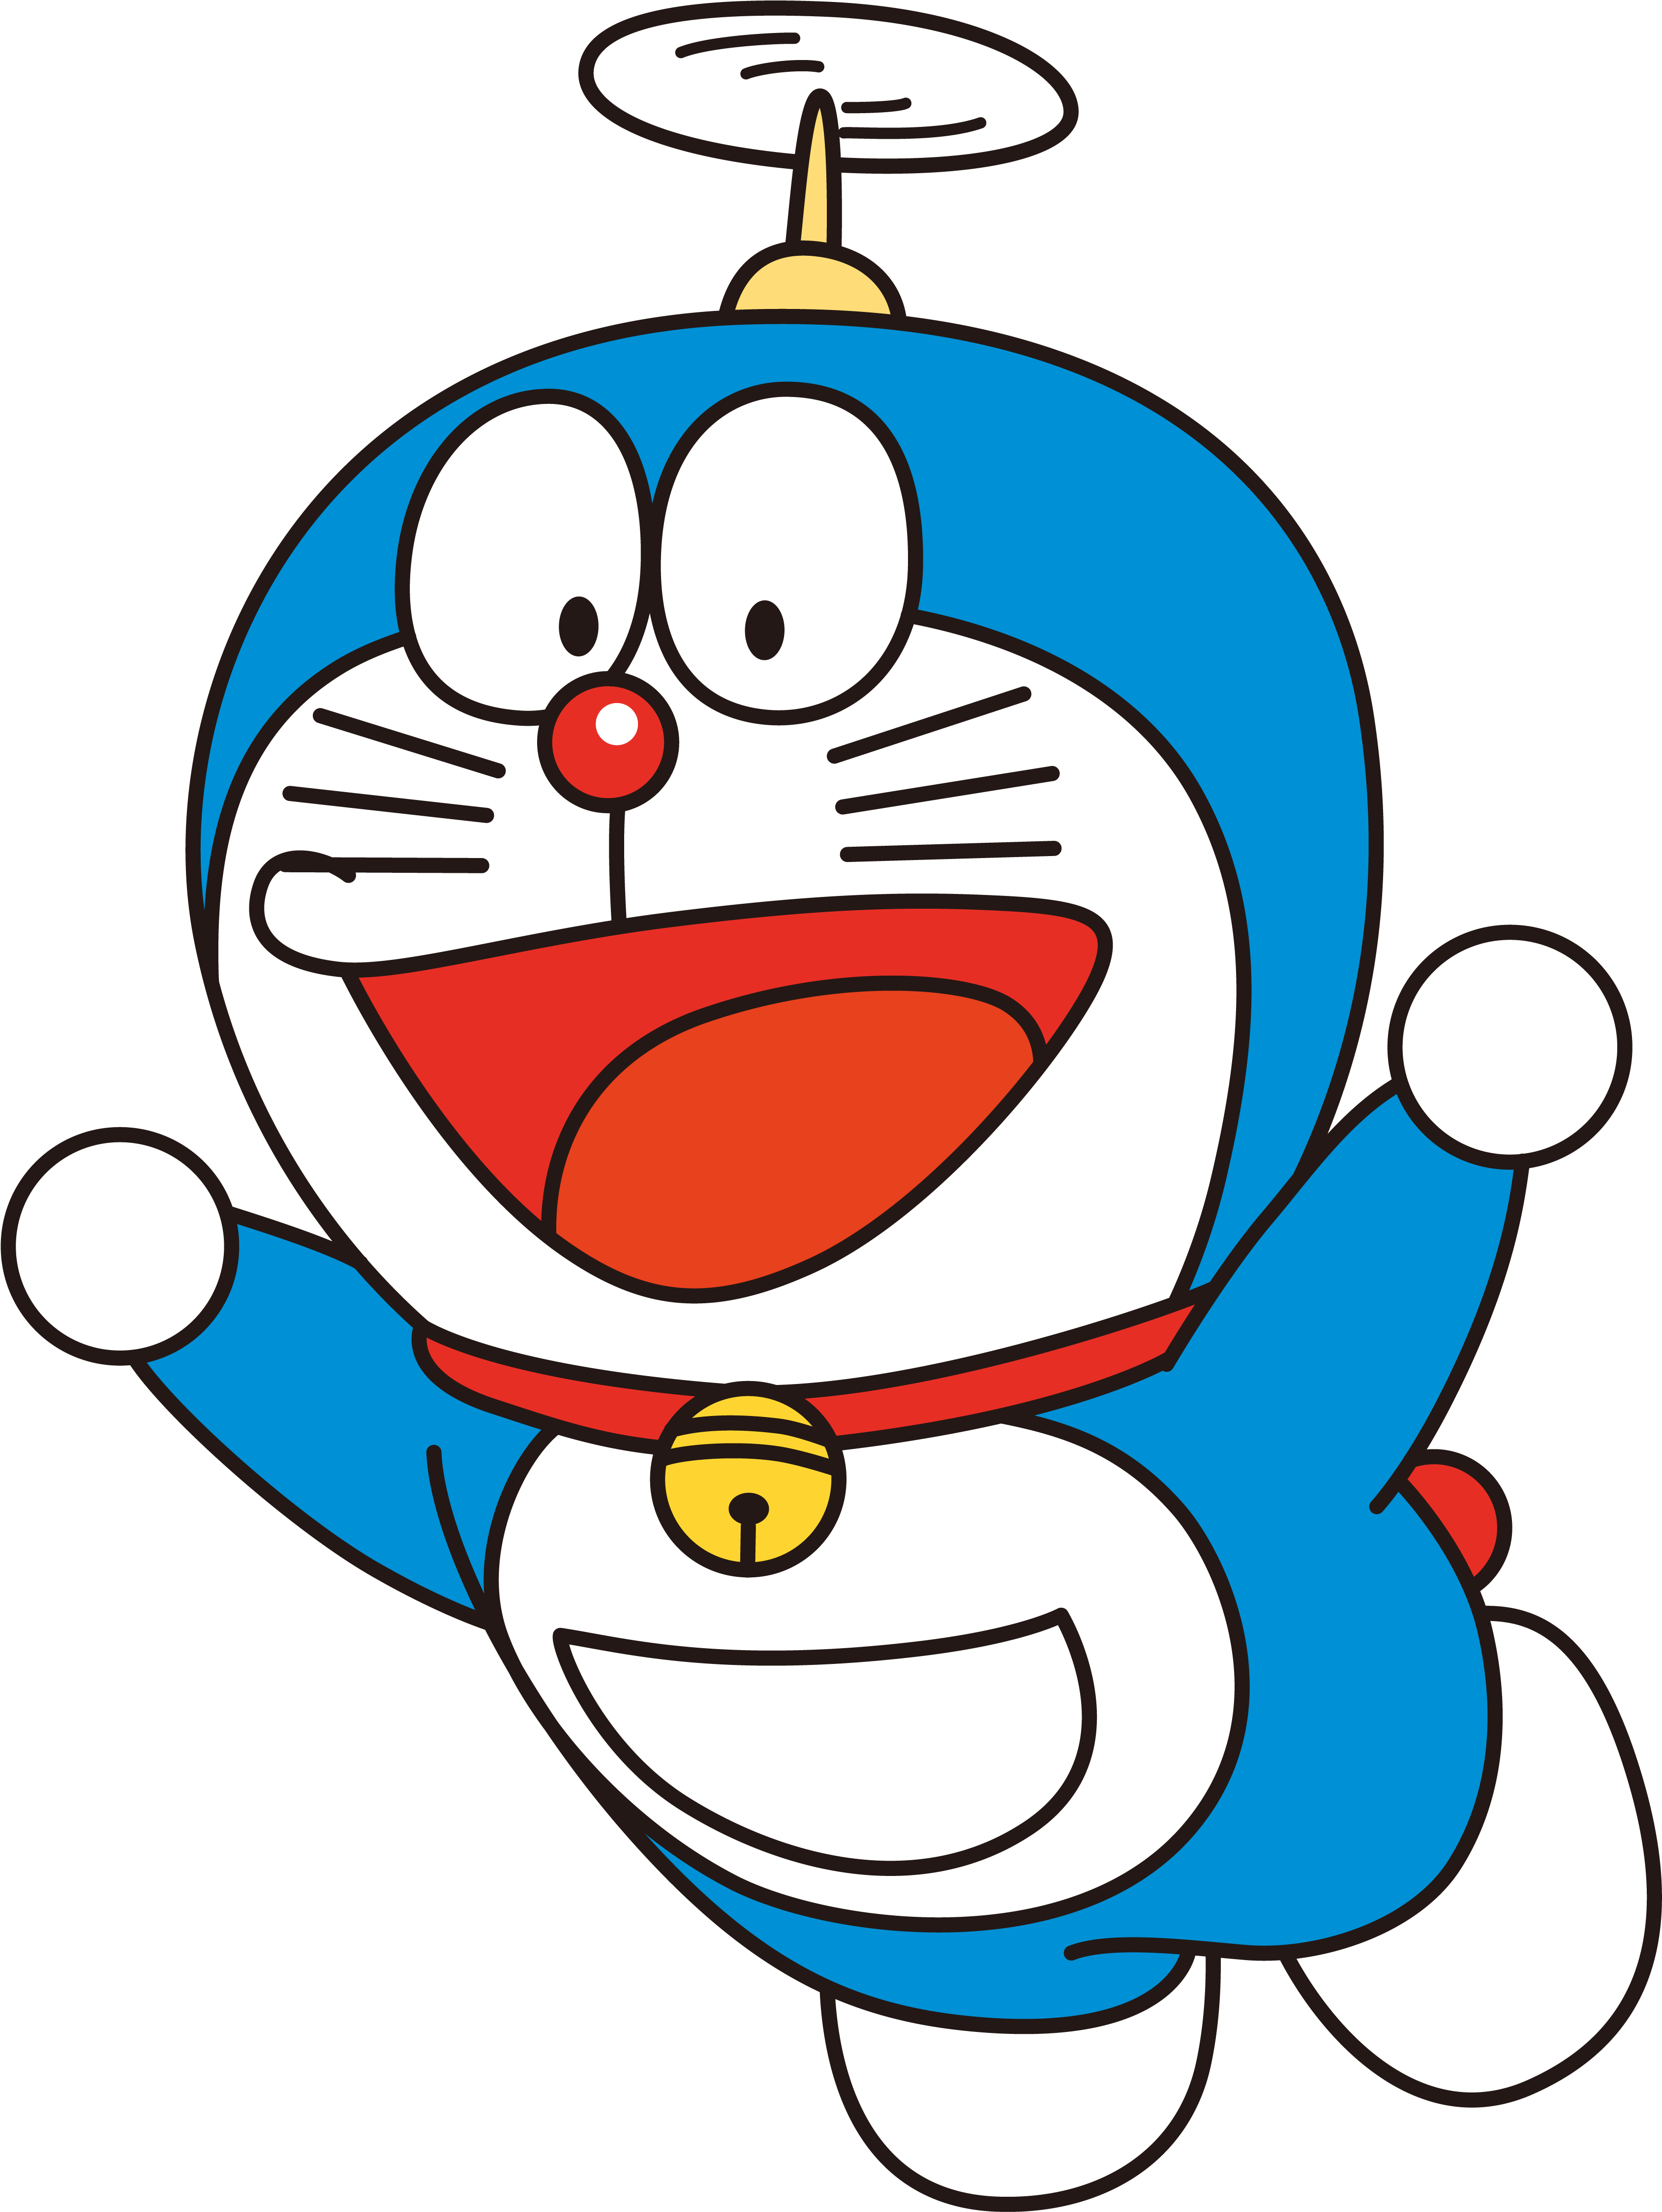 Doraemon And Dorami Wallpapers Wallpaper Cave